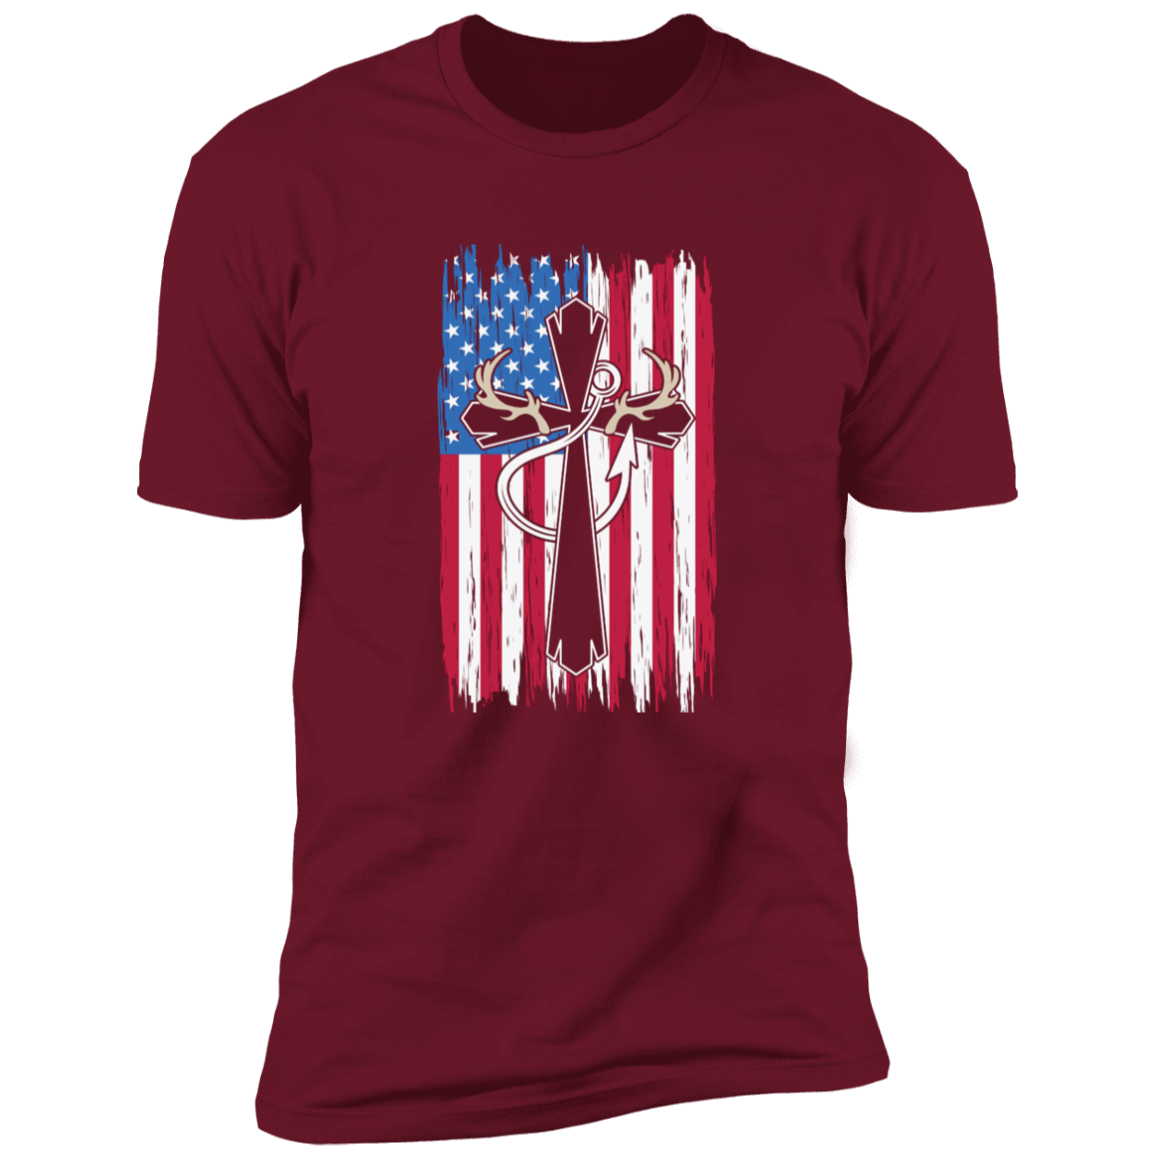 American flag/cross  Premium Short Sleeve Tee